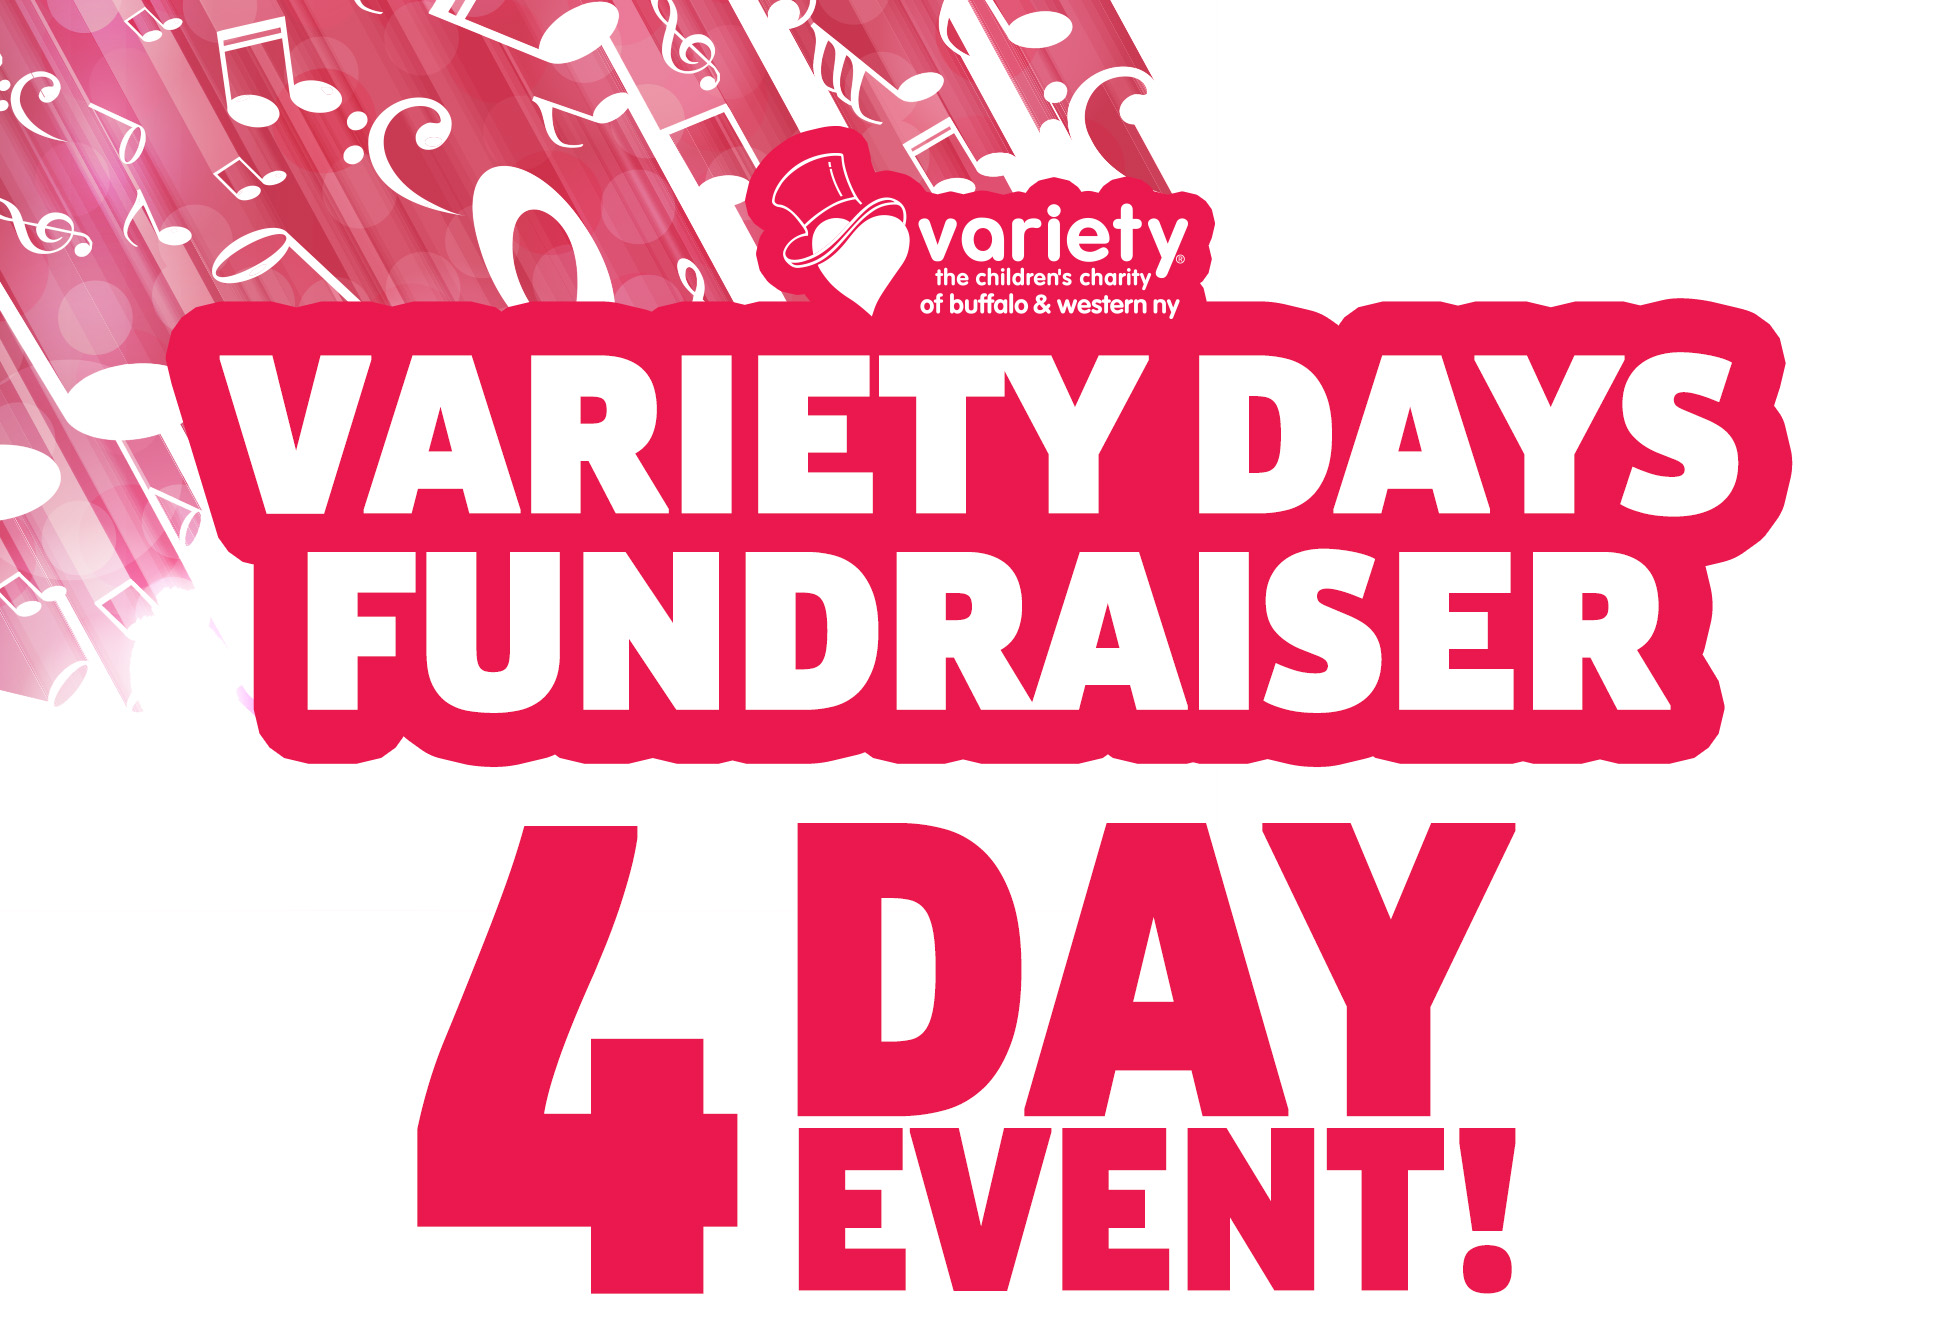 ***Brand New Fundraiser Alert: VARIETY DAYS!